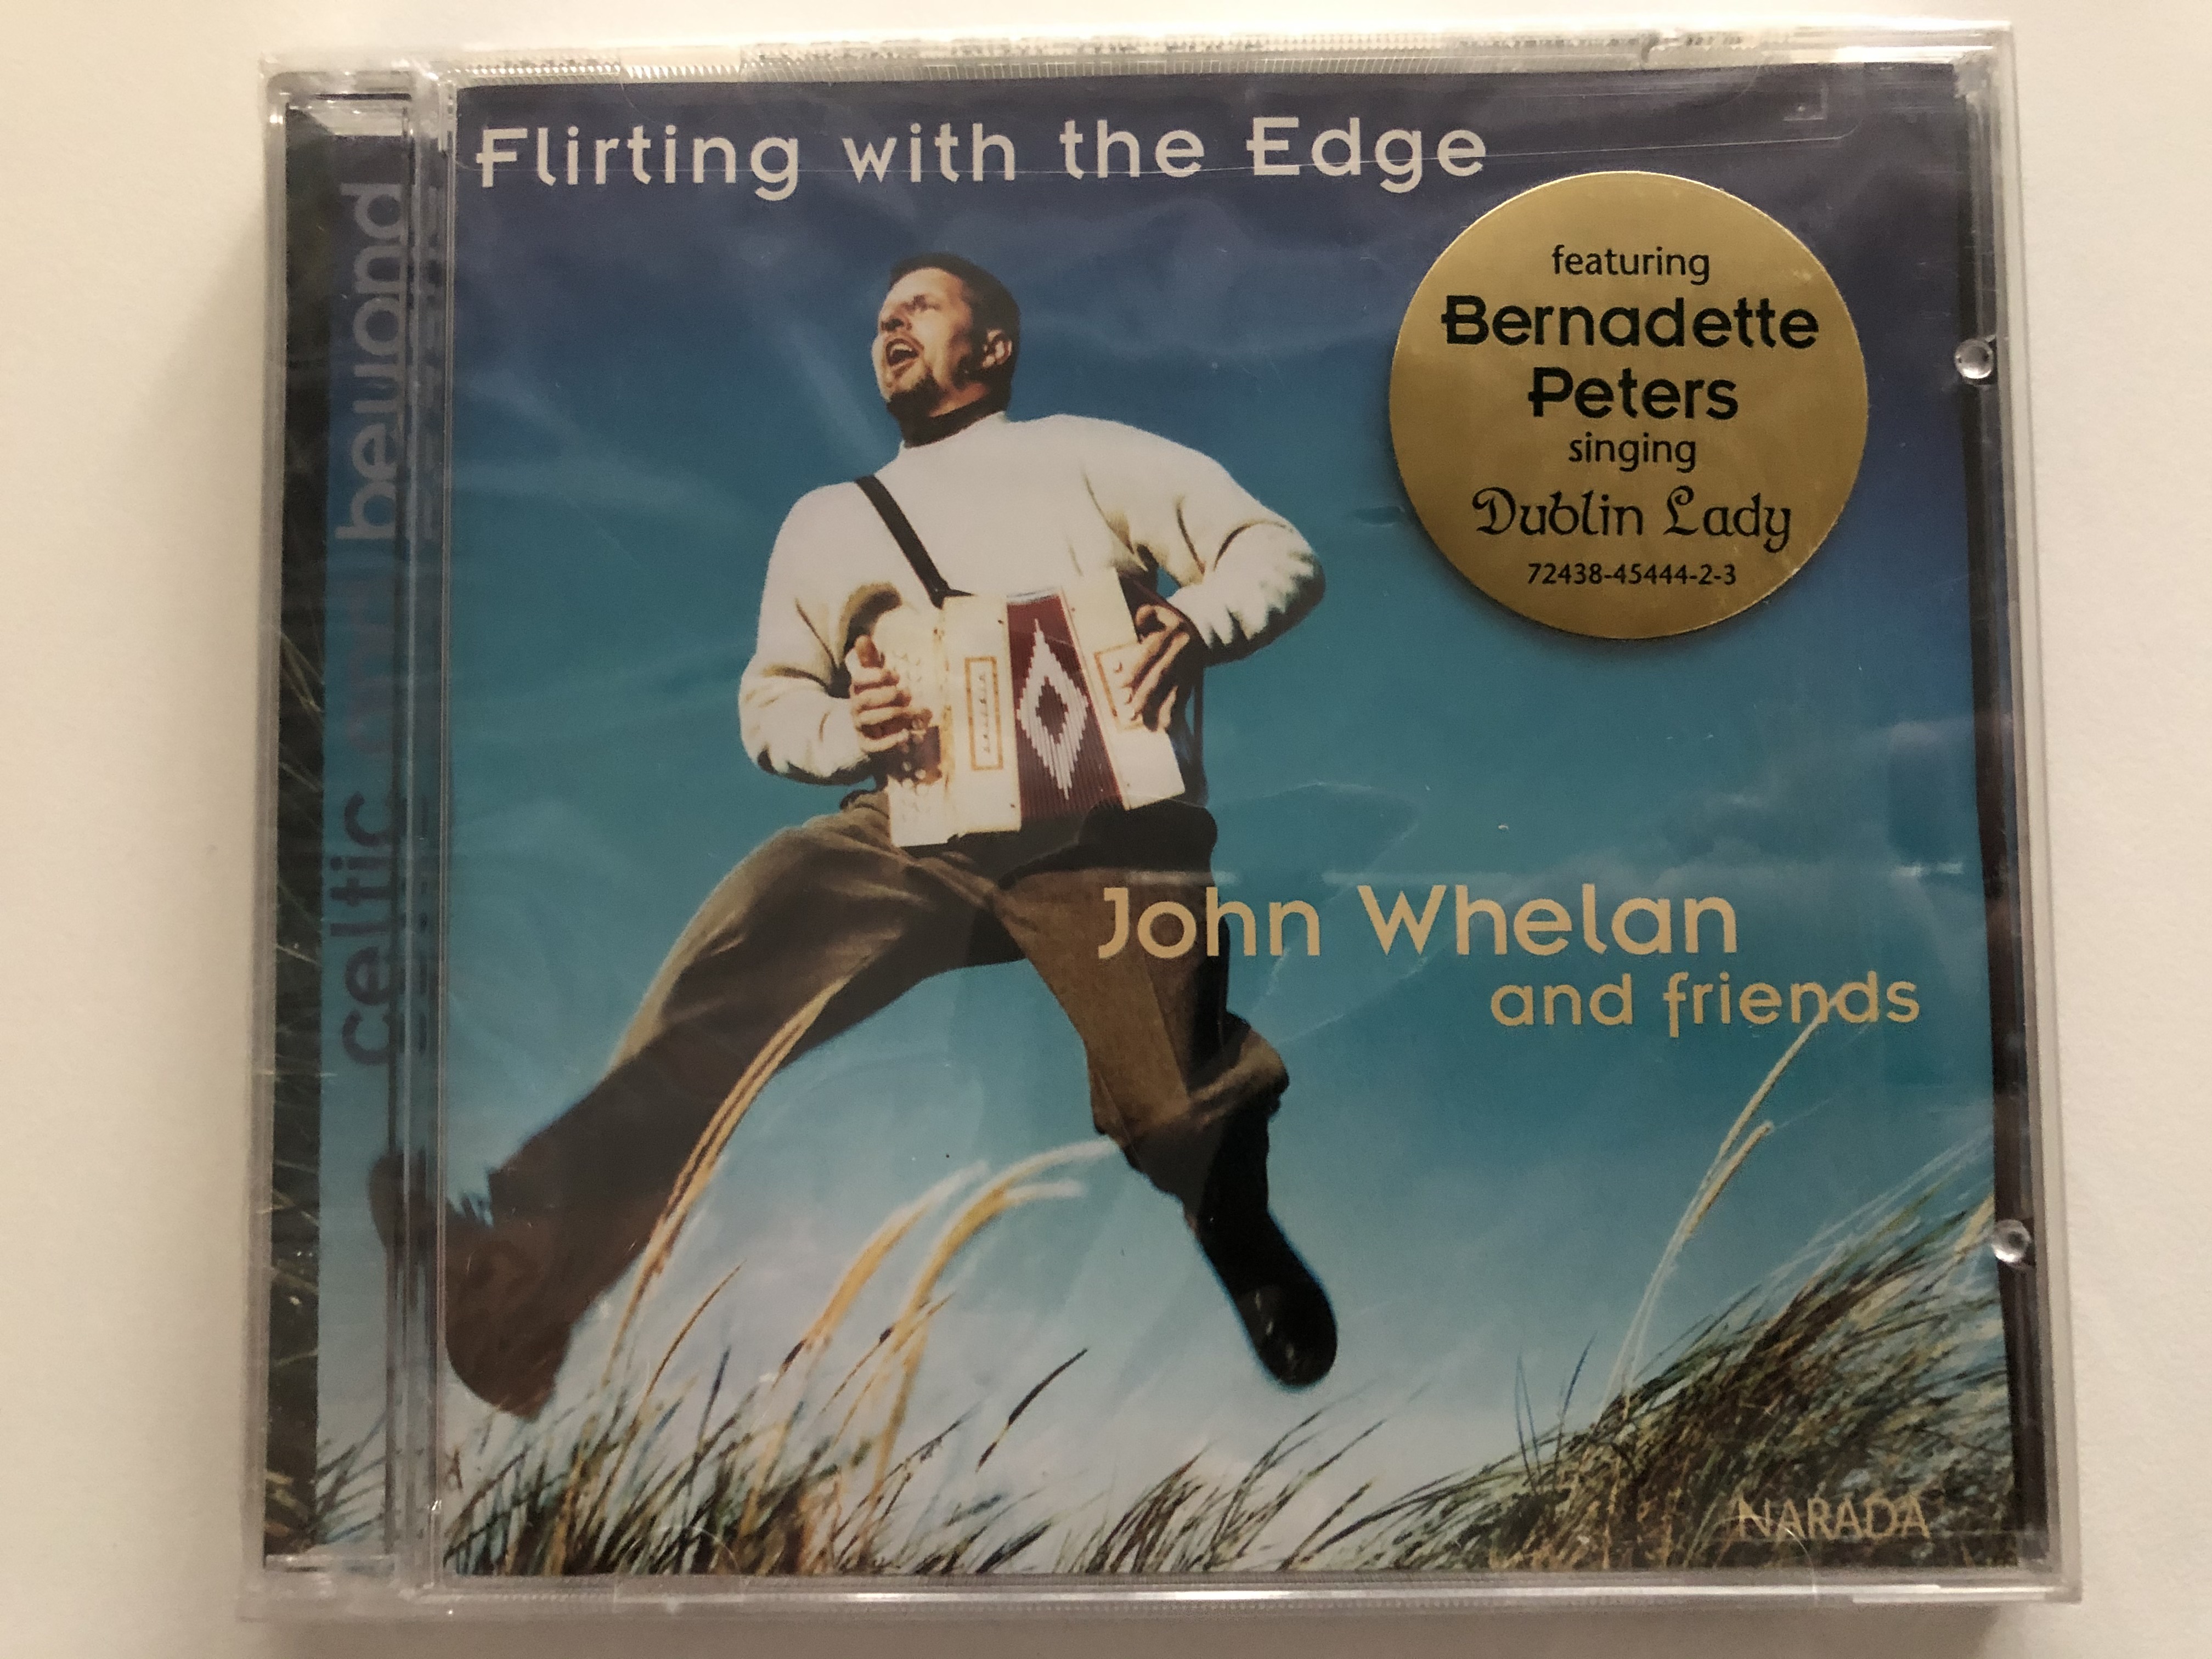 flirting-with-the-edge-john-whelan-and-friends-featuring-bernadette-peters-singing-dublin-lady-narada-audio-cd-1998-72438-45444-2-3-1-.jpg